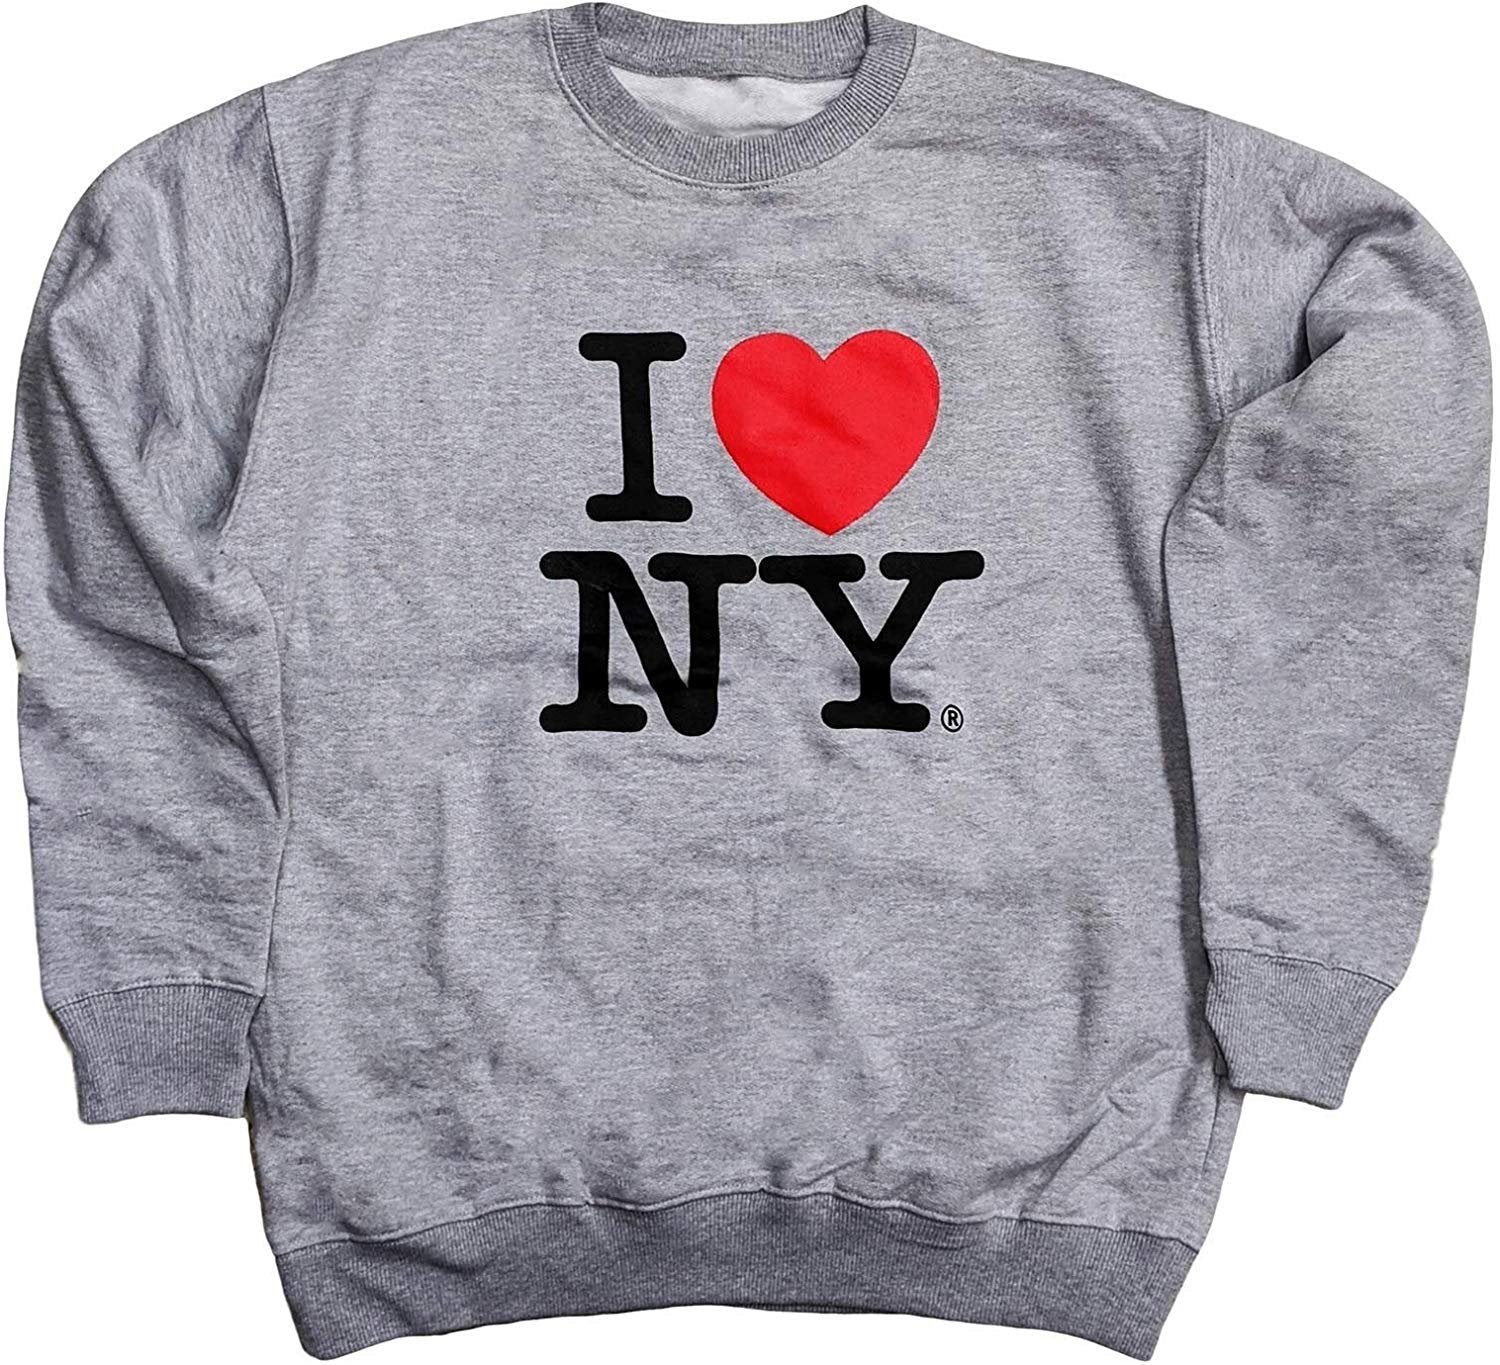 I Love NY Crewneck Sweatshirt Heather Gray Officially Licensed